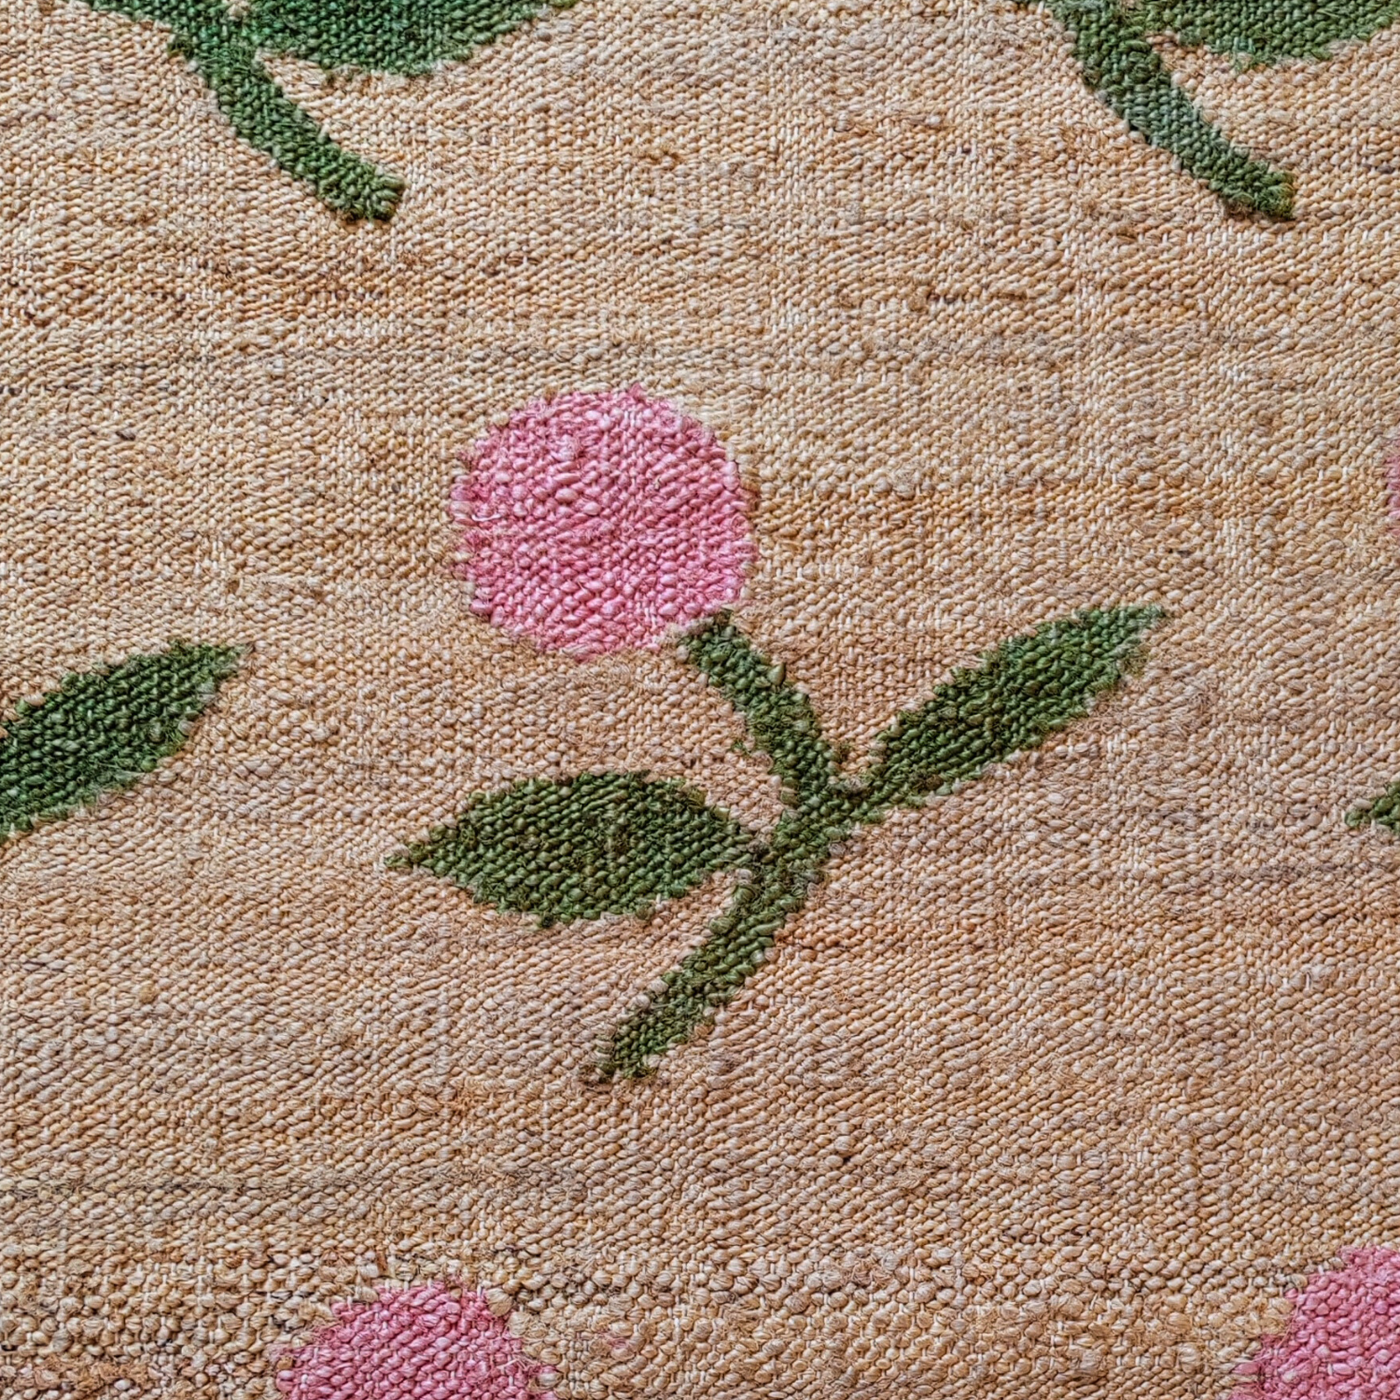 Alys - Rose Pink & Moss Green - 2.0 x 2.4m